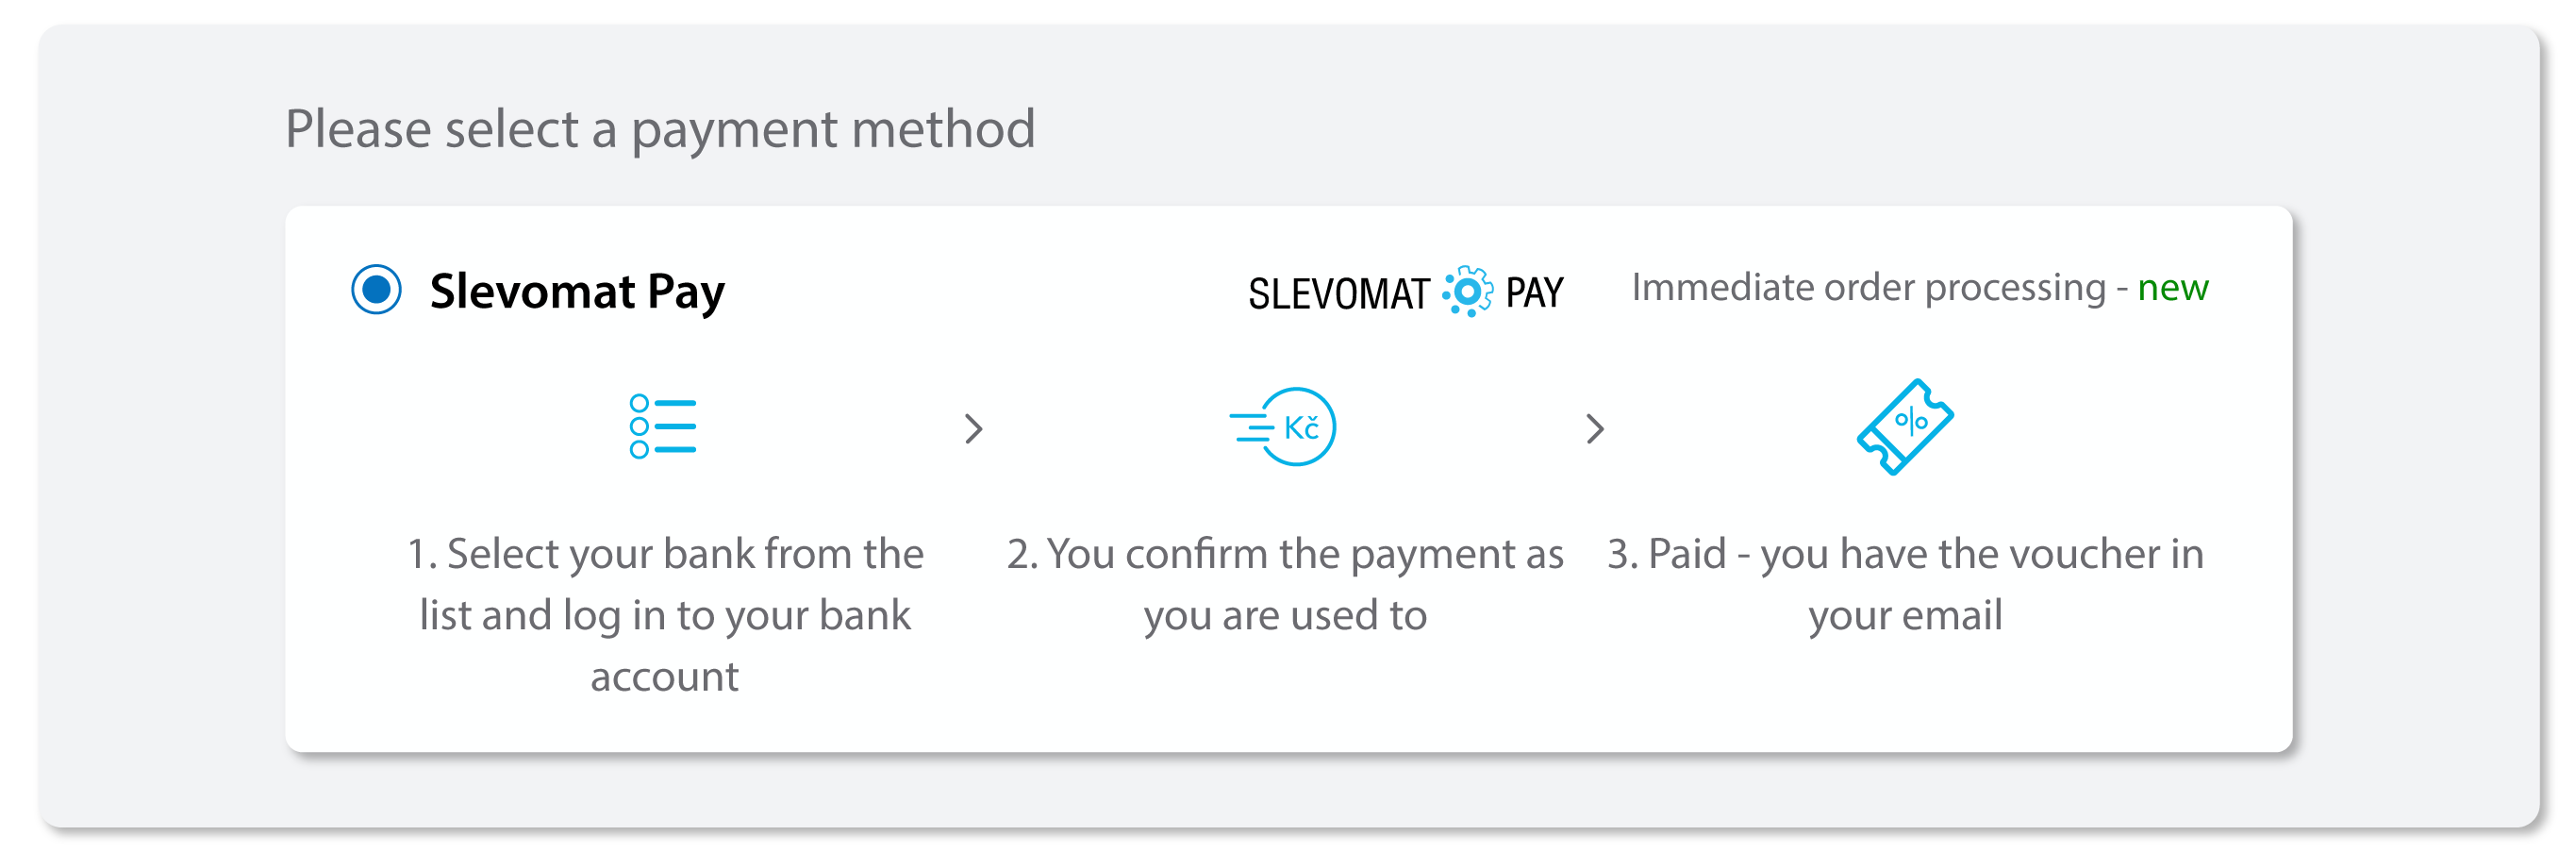 Slevomat Pay payment method